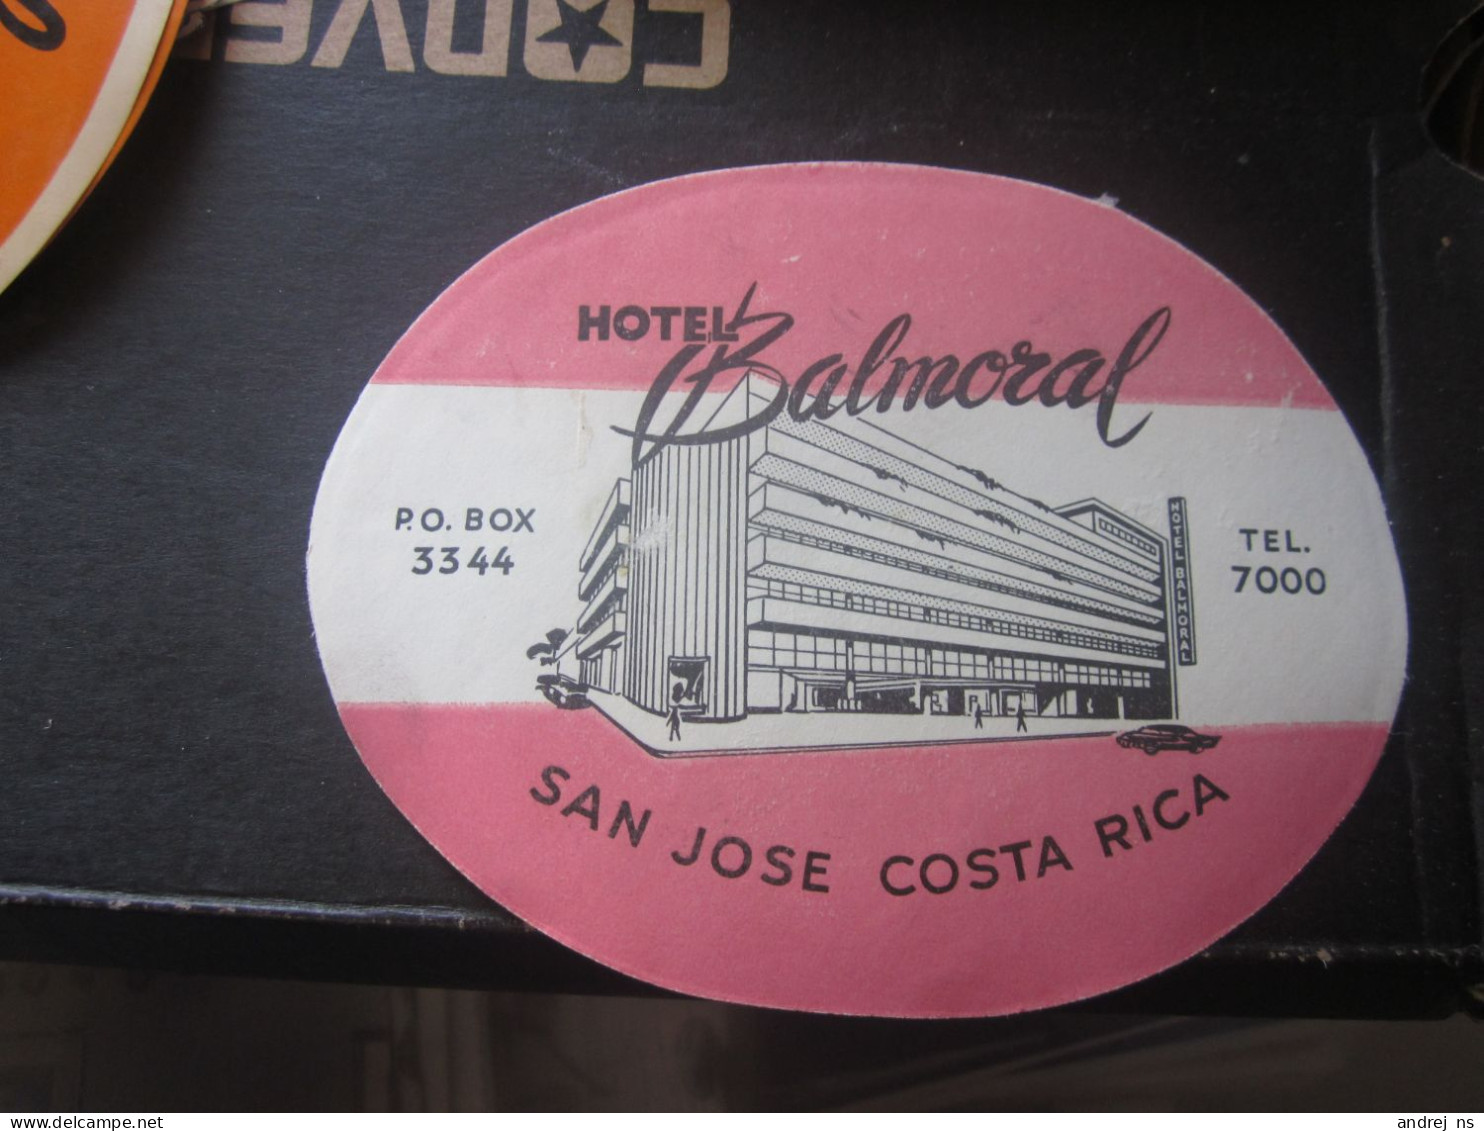 Hotel Balmoral San Jose Costa Rica - Hotel Labels